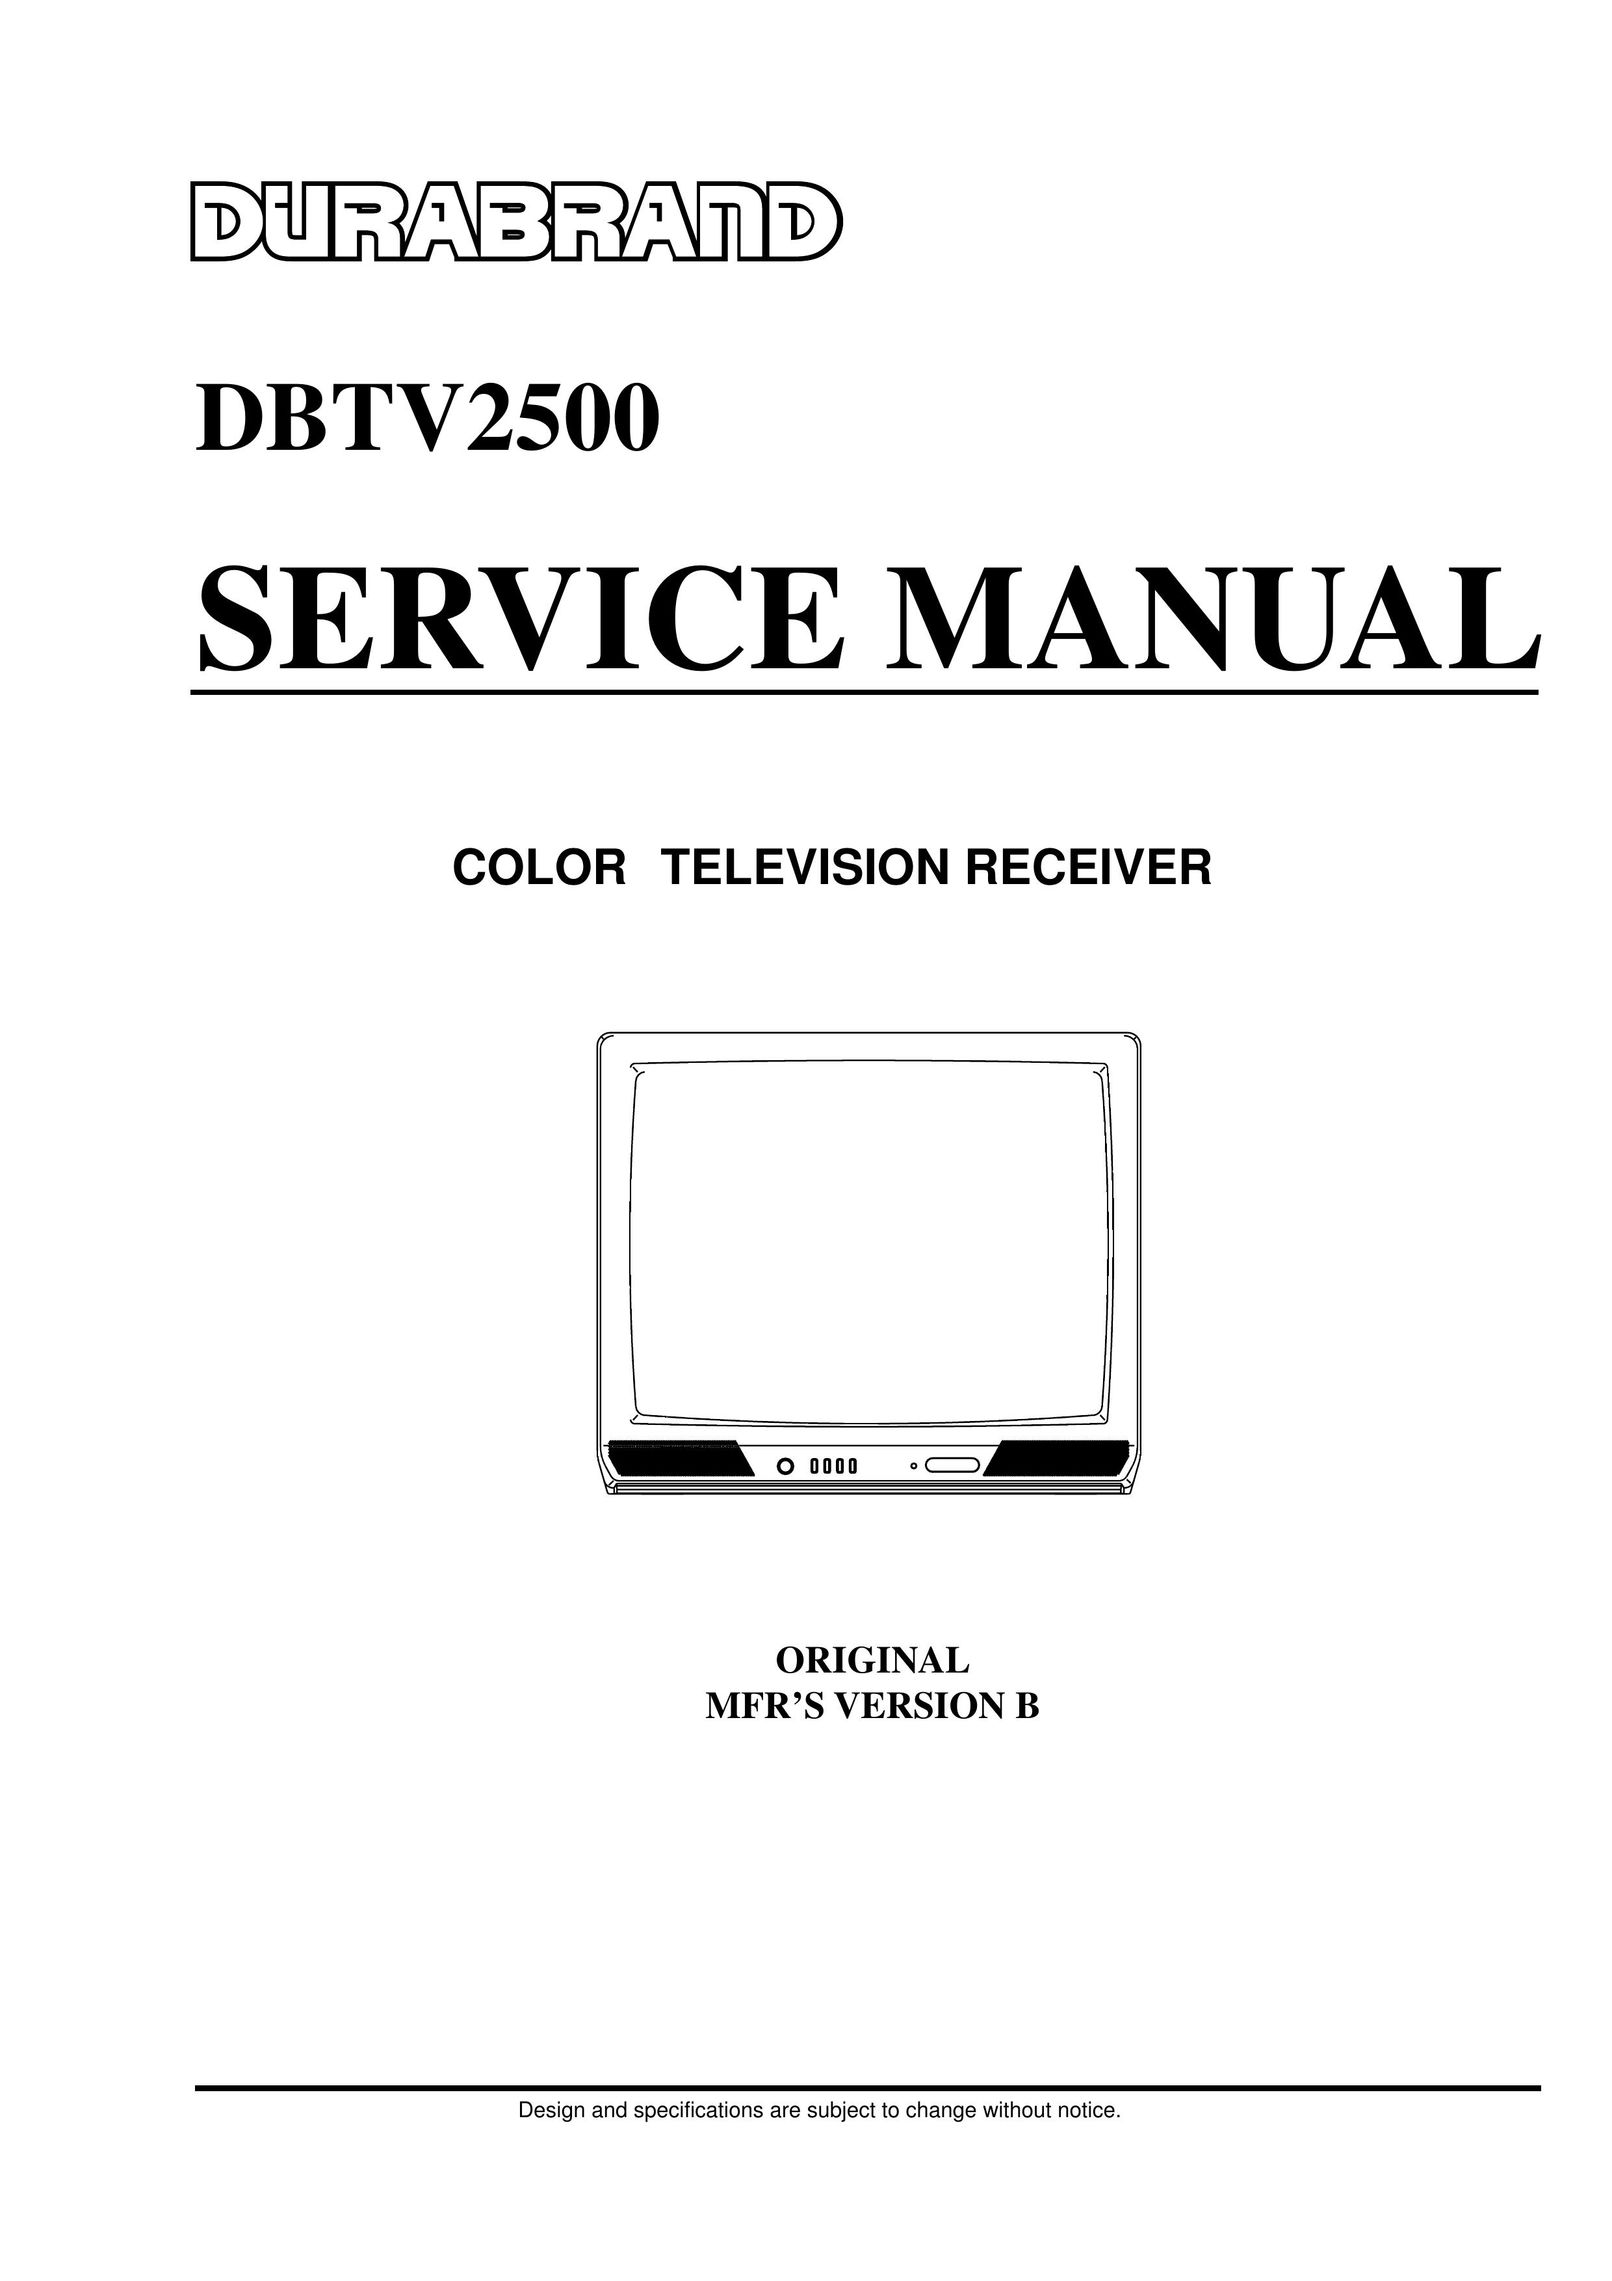 Durabrand DBTV2500 CRT Television User Manual